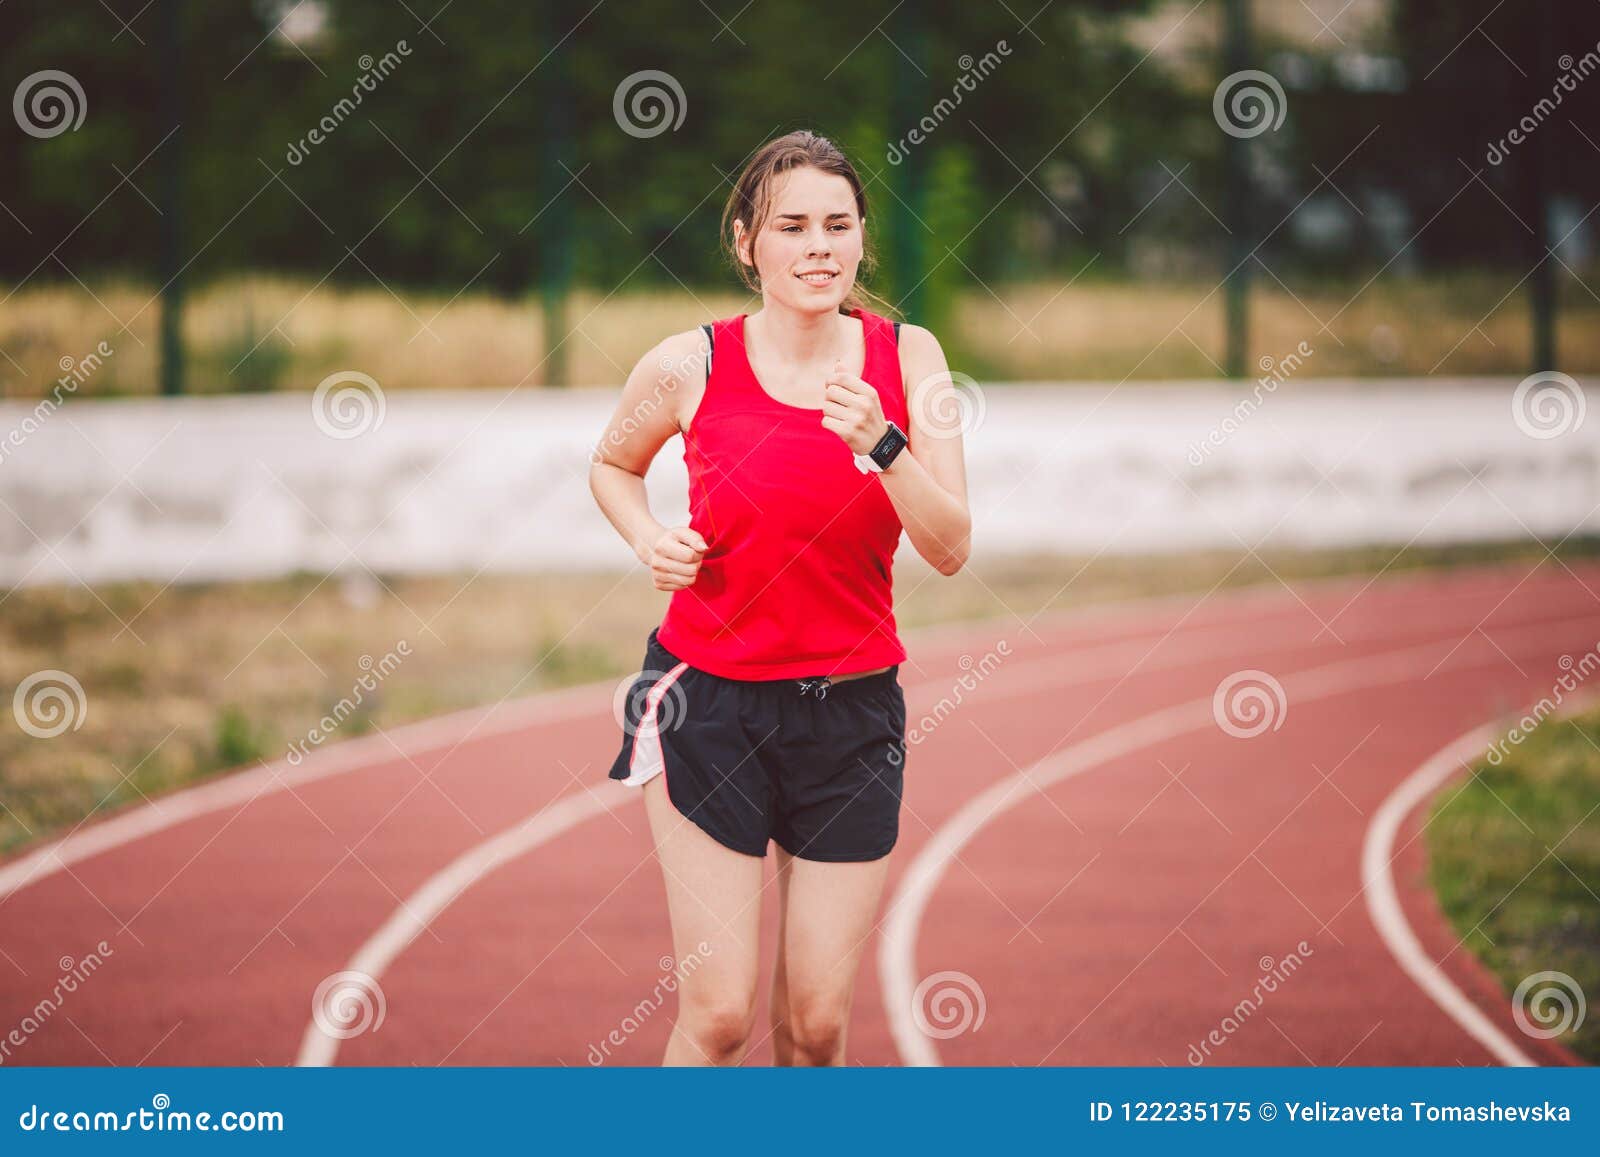 https://thumbs.dreamstime.com/z/beautiful-young-athlete-caucasian-woman-big-breasts-red-t-shirt-short-shorts-running-jog-stadium-rubber-coating-122235175.jpg